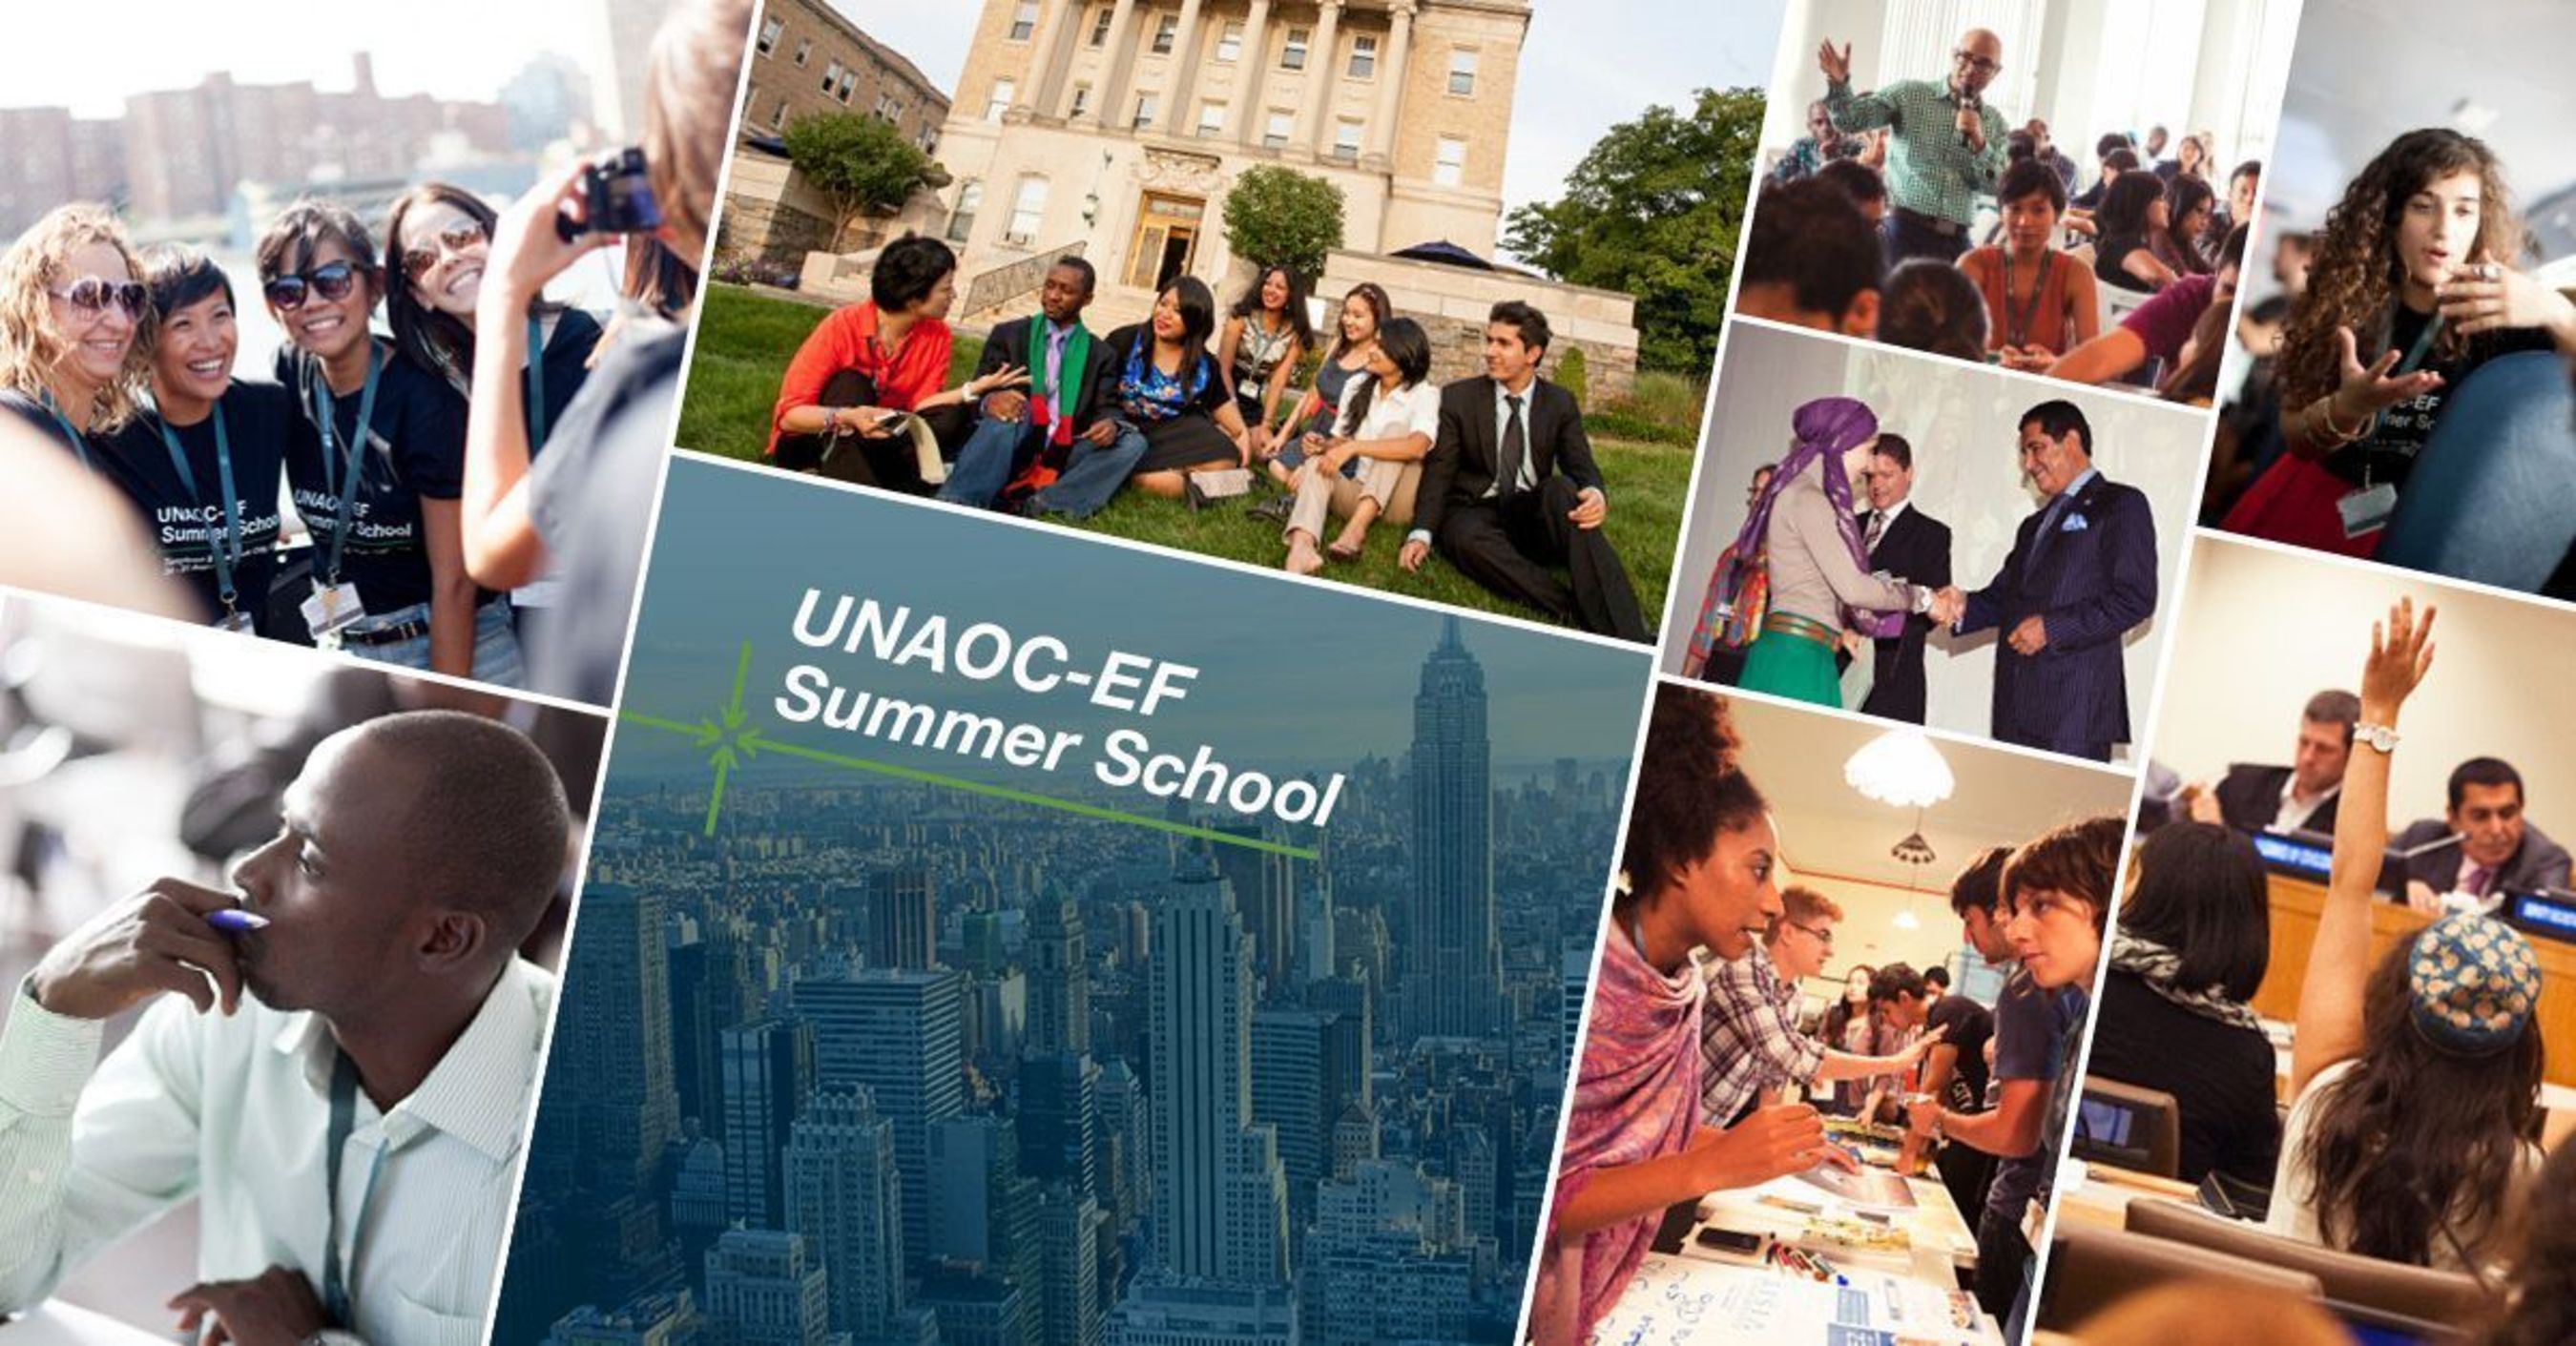 Apply now for the UNAOC-EF Summer School in Tarrytown, New York. (PRNewsFoto/EF Education First _EF_)